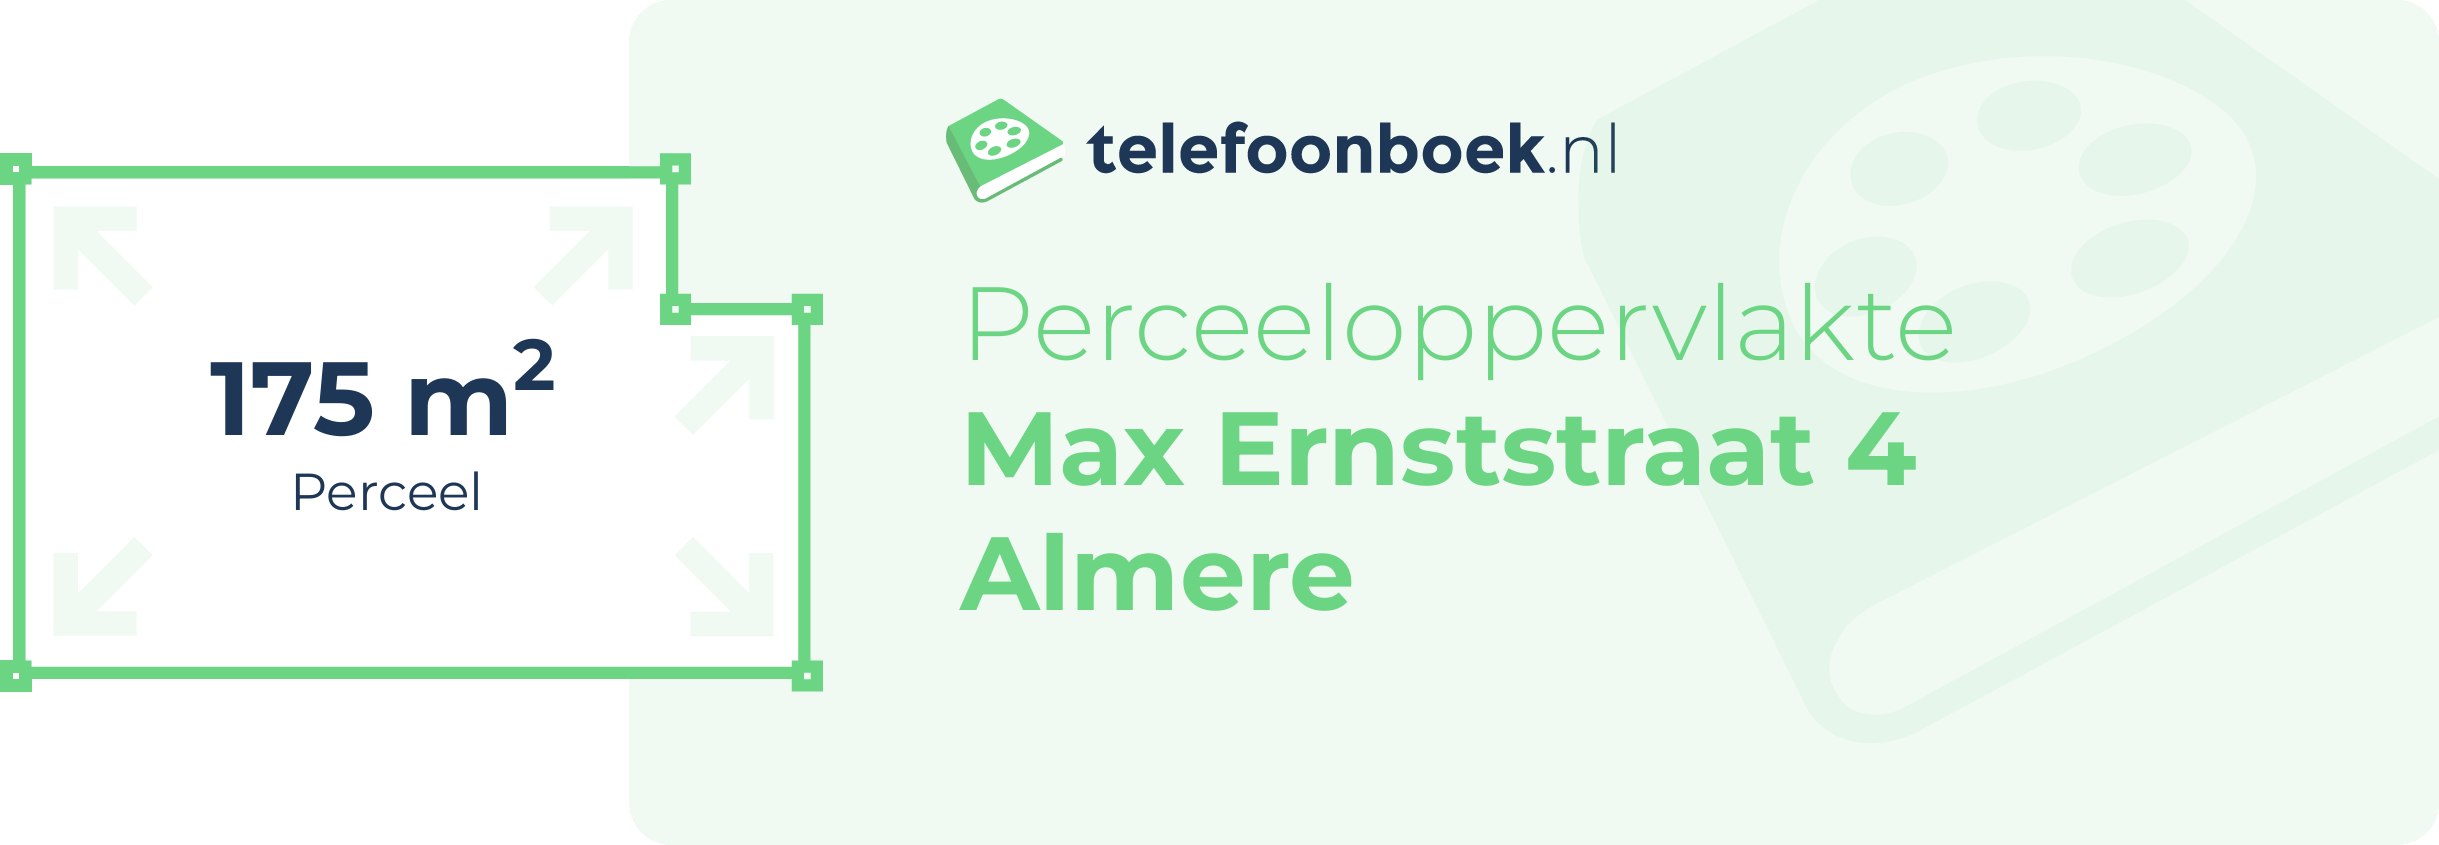 Perceeloppervlakte Max Ernststraat 4 Almere